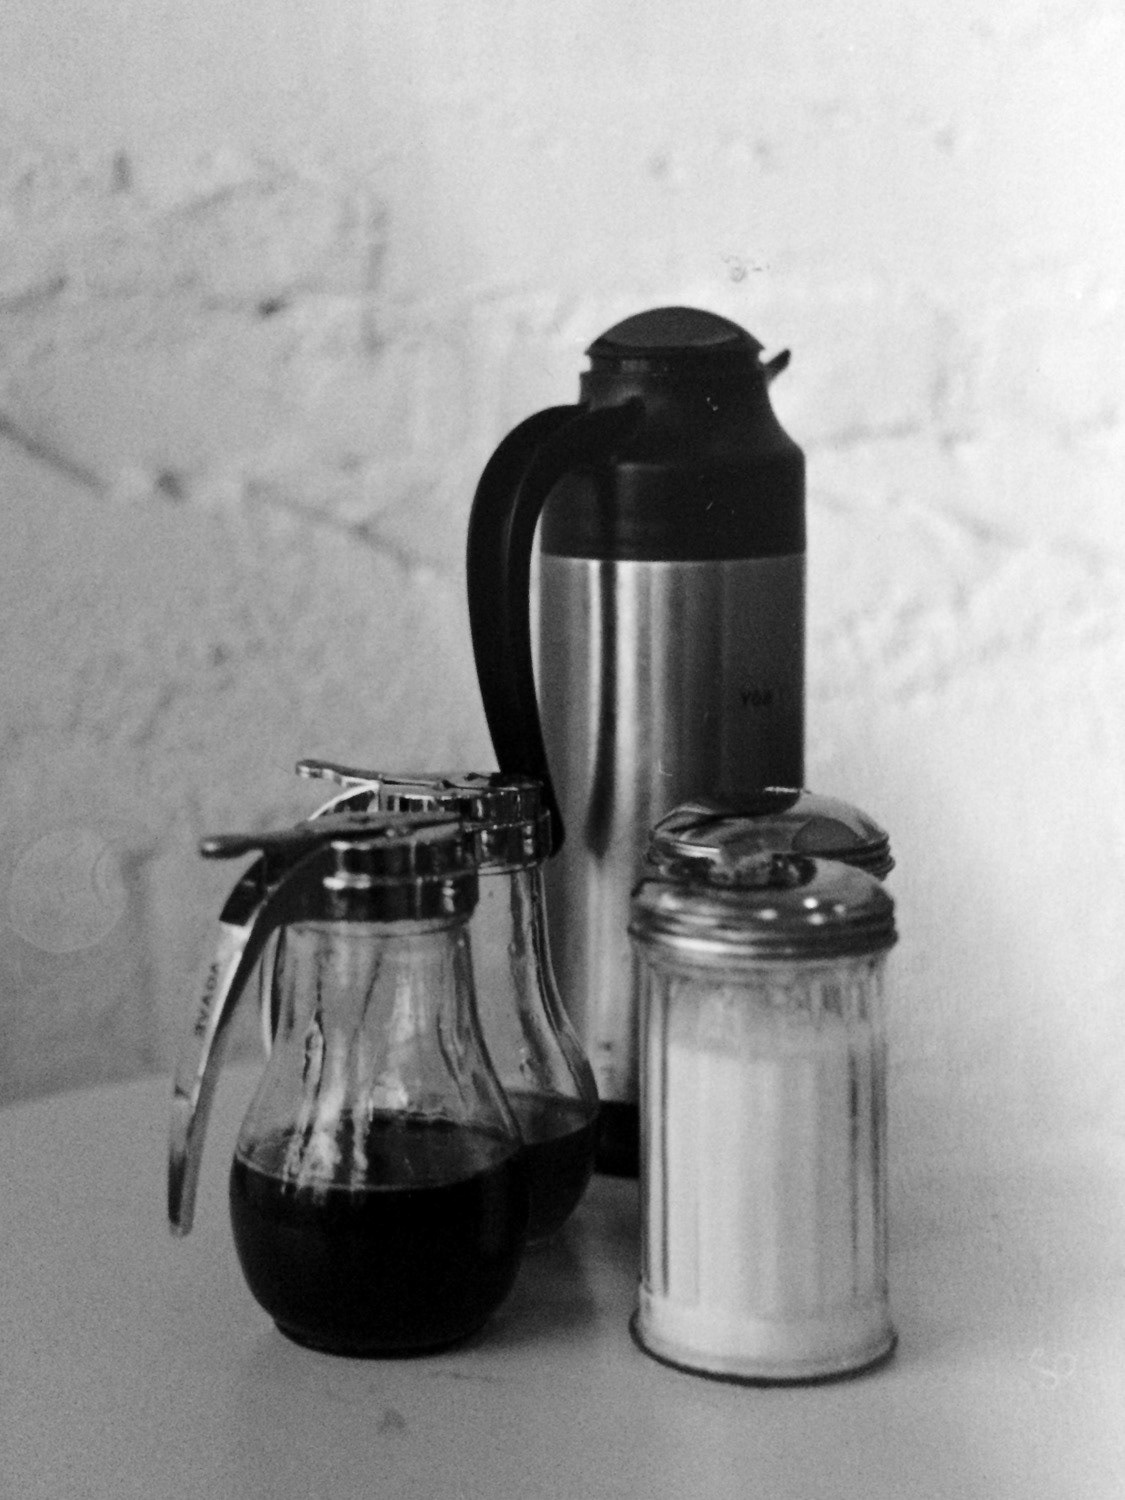 Coffee coffee shop medium format Yashica